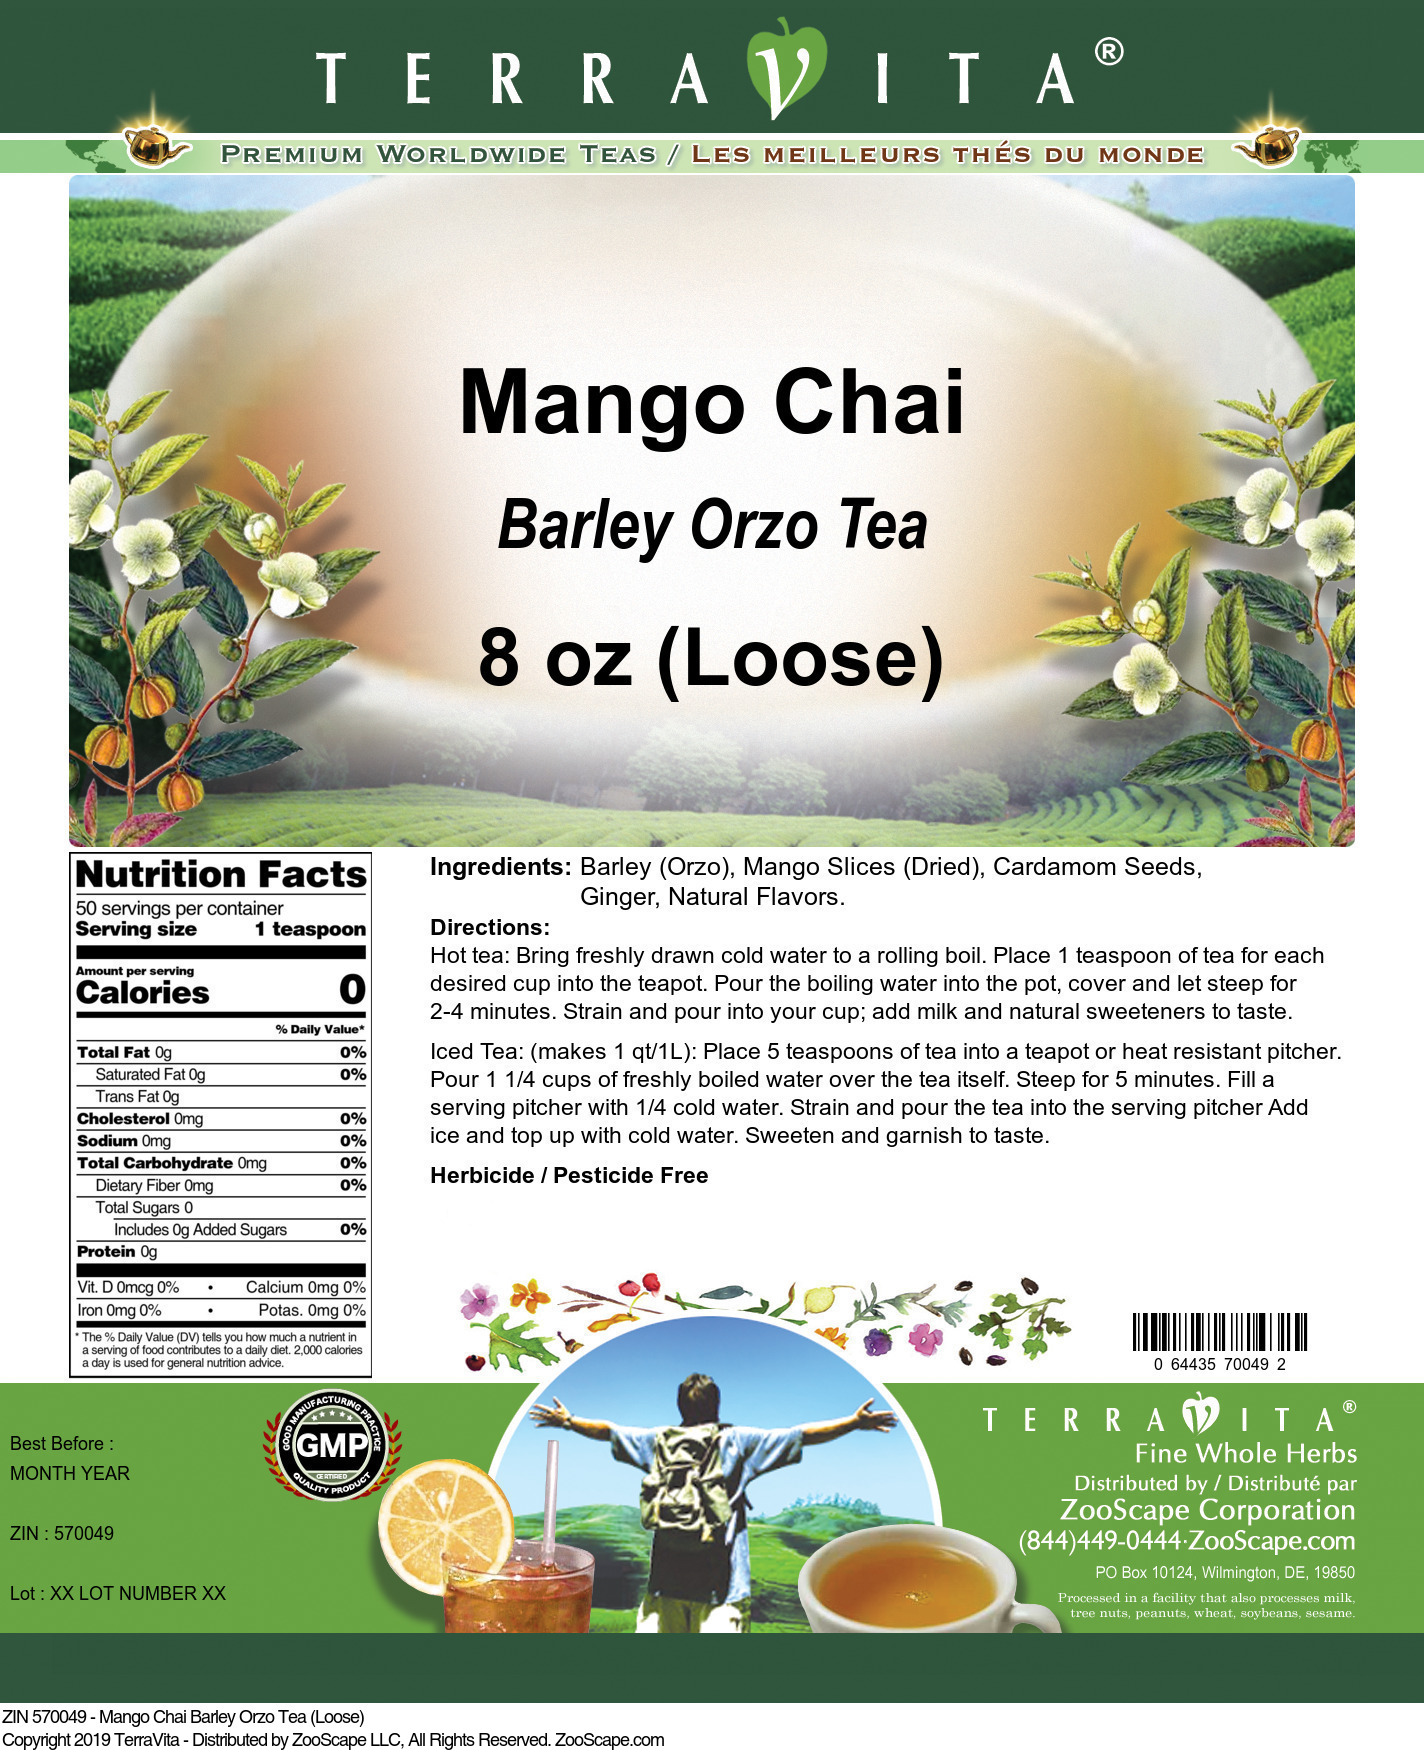 Mango Chai Barley Orzo Tea (Loose) - Label